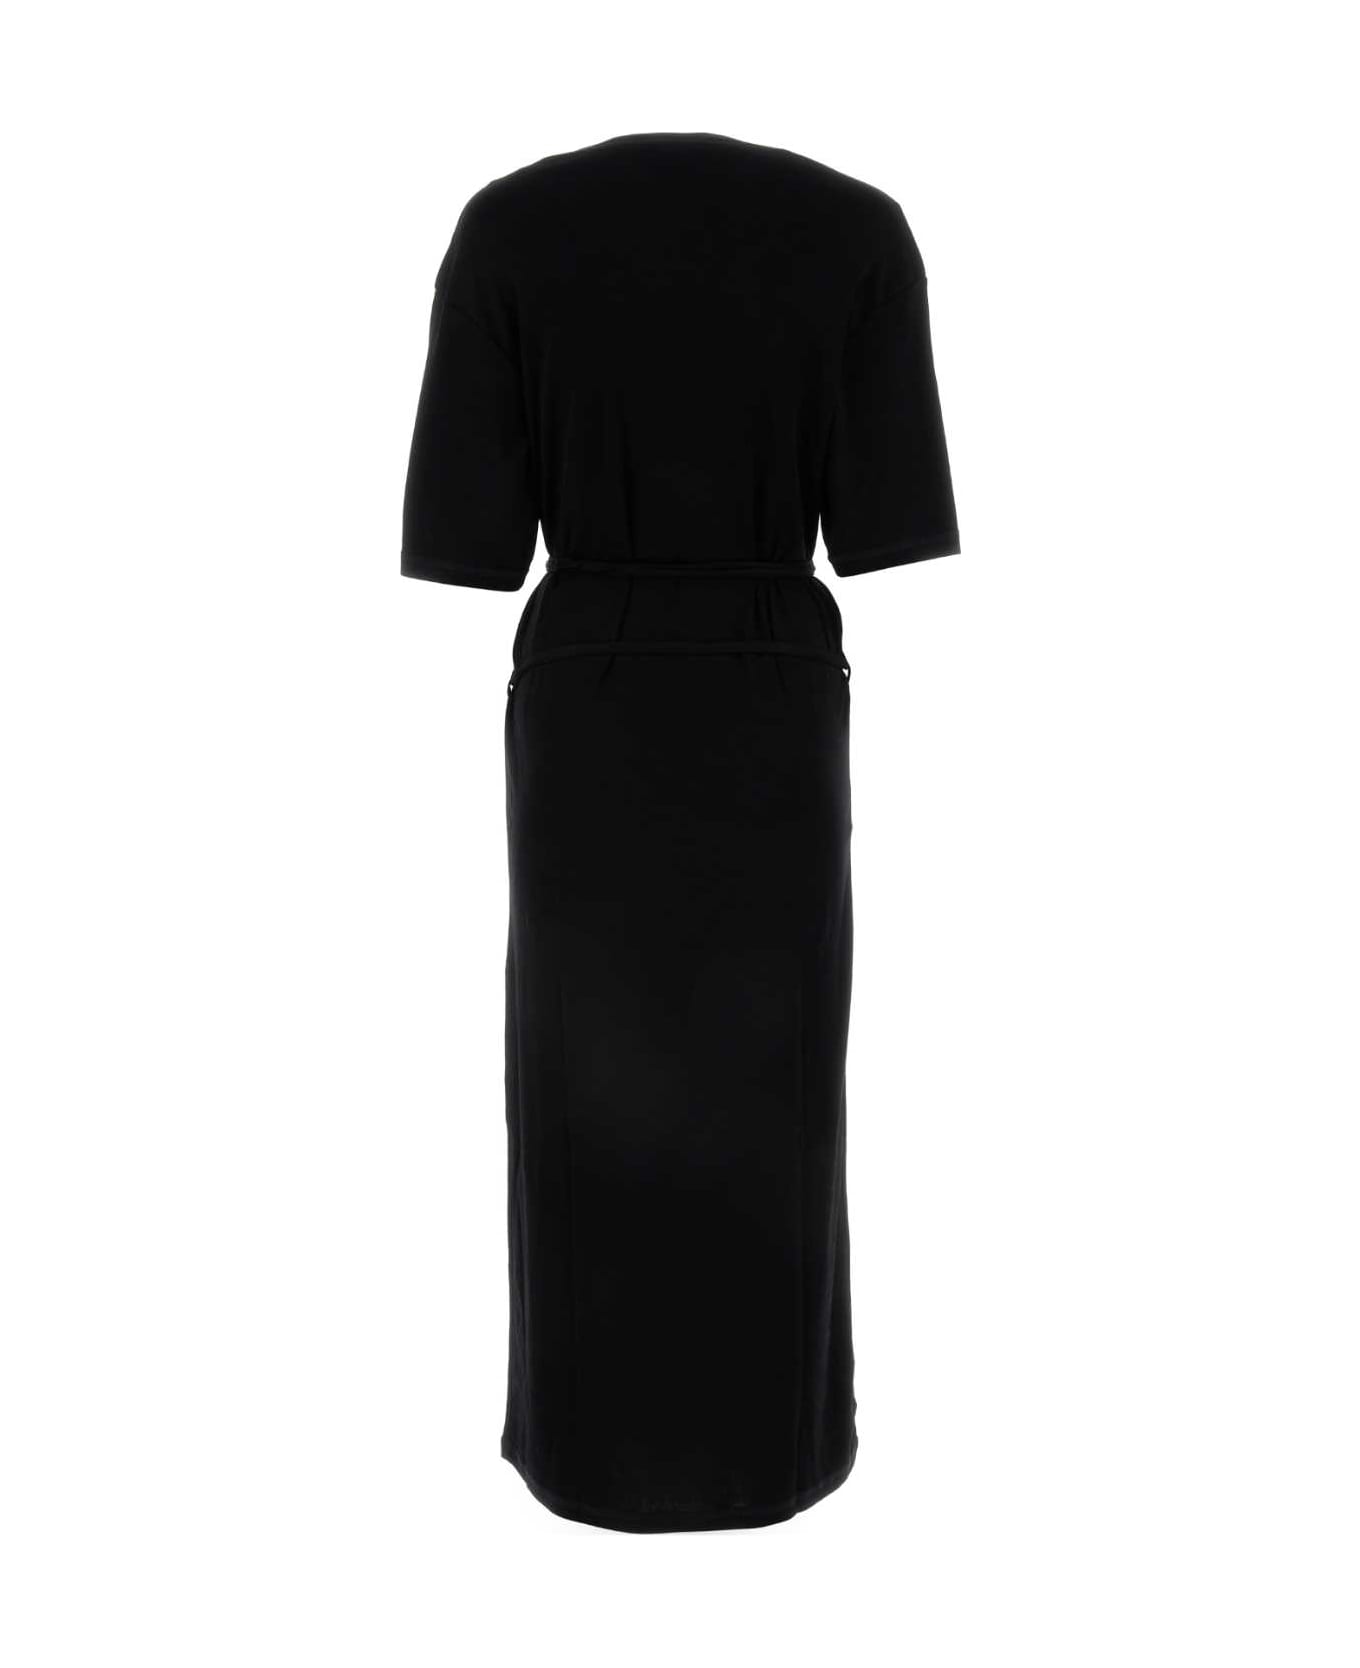 Lemaire Black Jersey Dress - BLACK